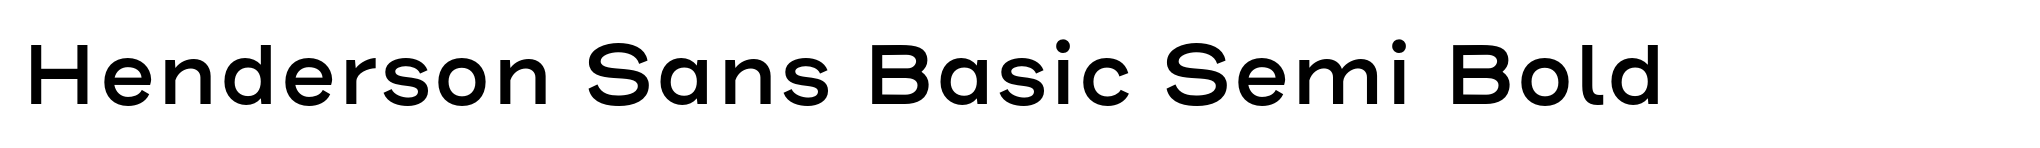 Henderson Sans Basic Semi Bold image